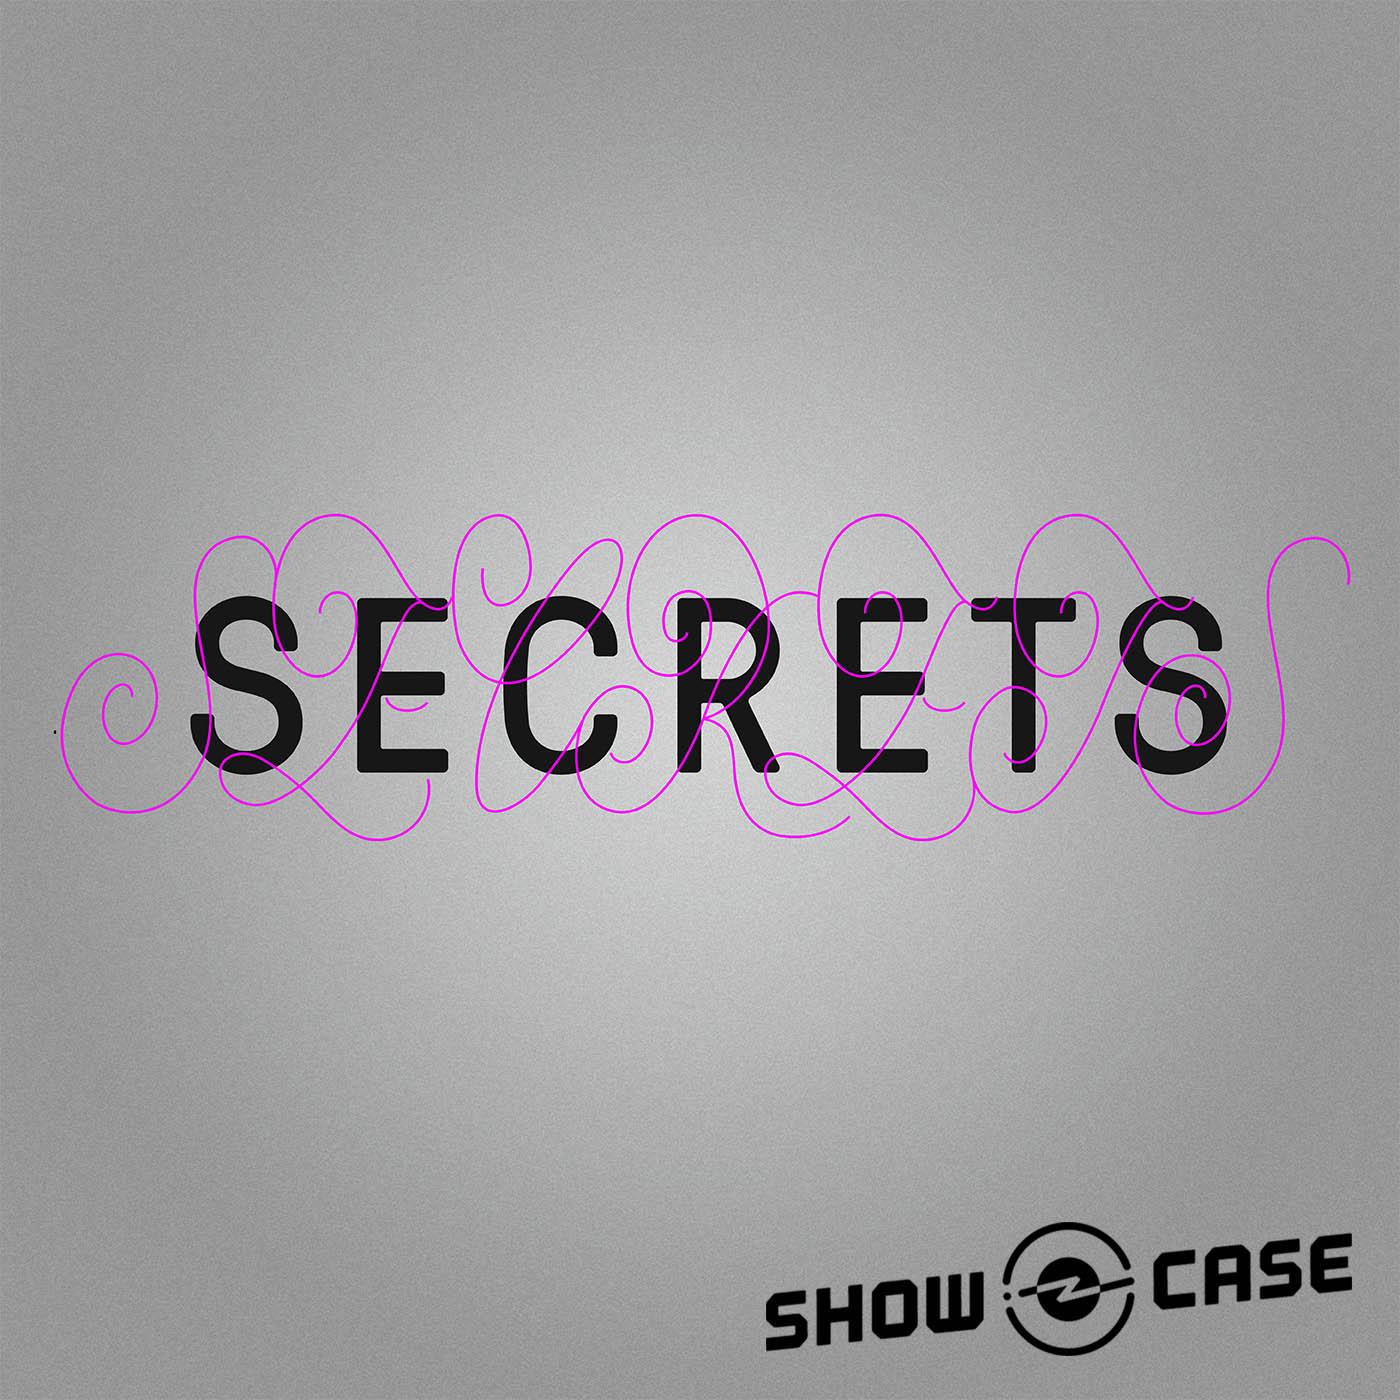 Thumbnail for "Next on Showcase: Secrets".